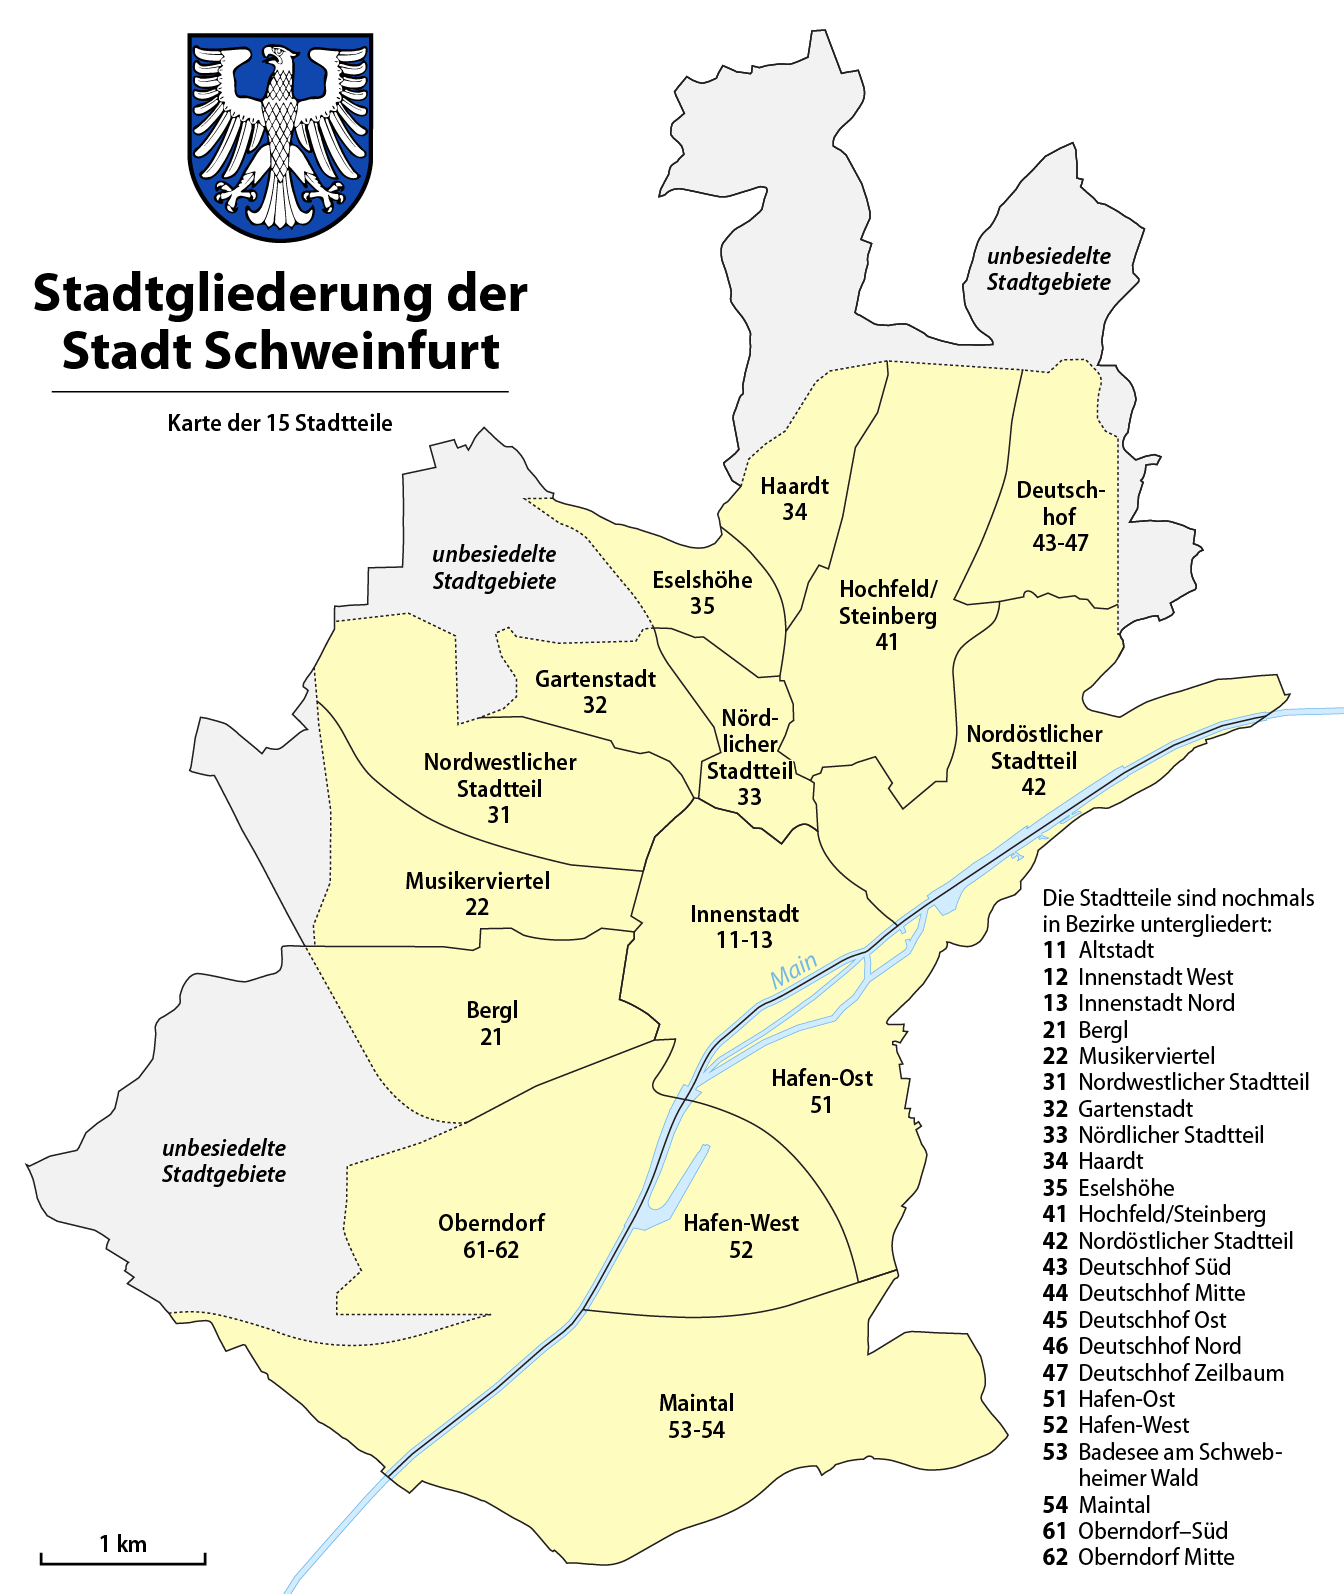 schweinfurt karte File Karte Stadtteile Stadt Schweinfurt Png Wikimedia Commons schweinfurt karte